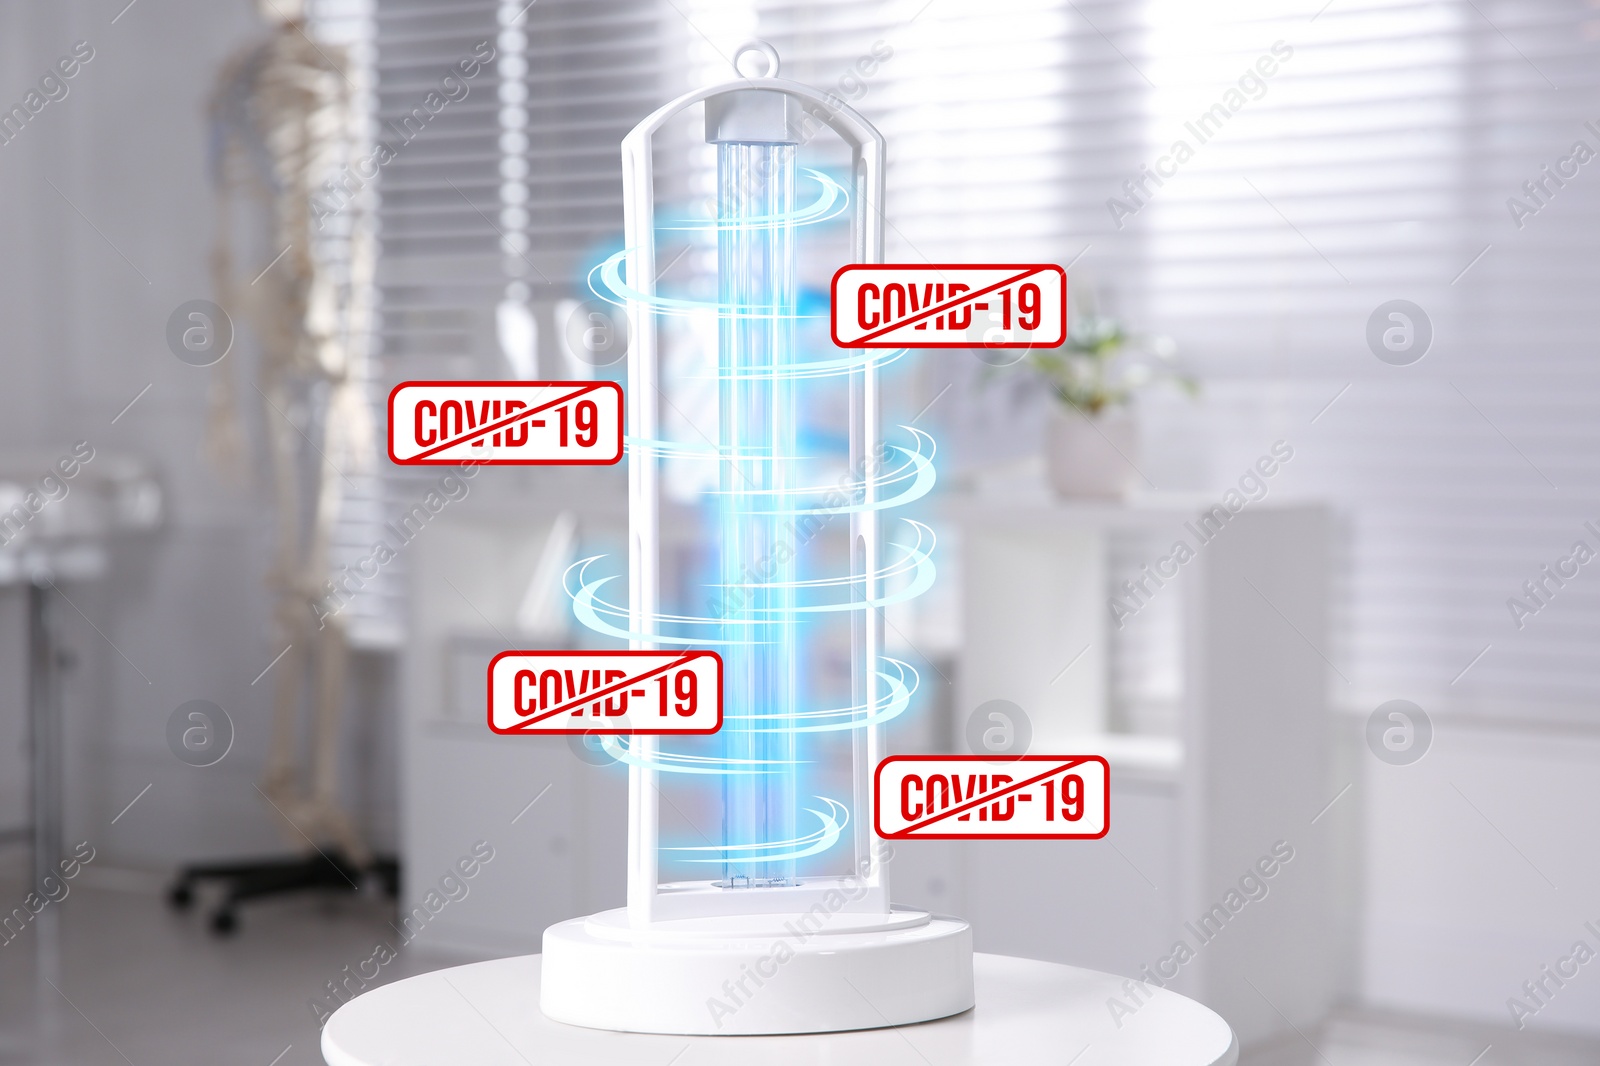 Image of UV lamp for light sterilization on white table in hospital